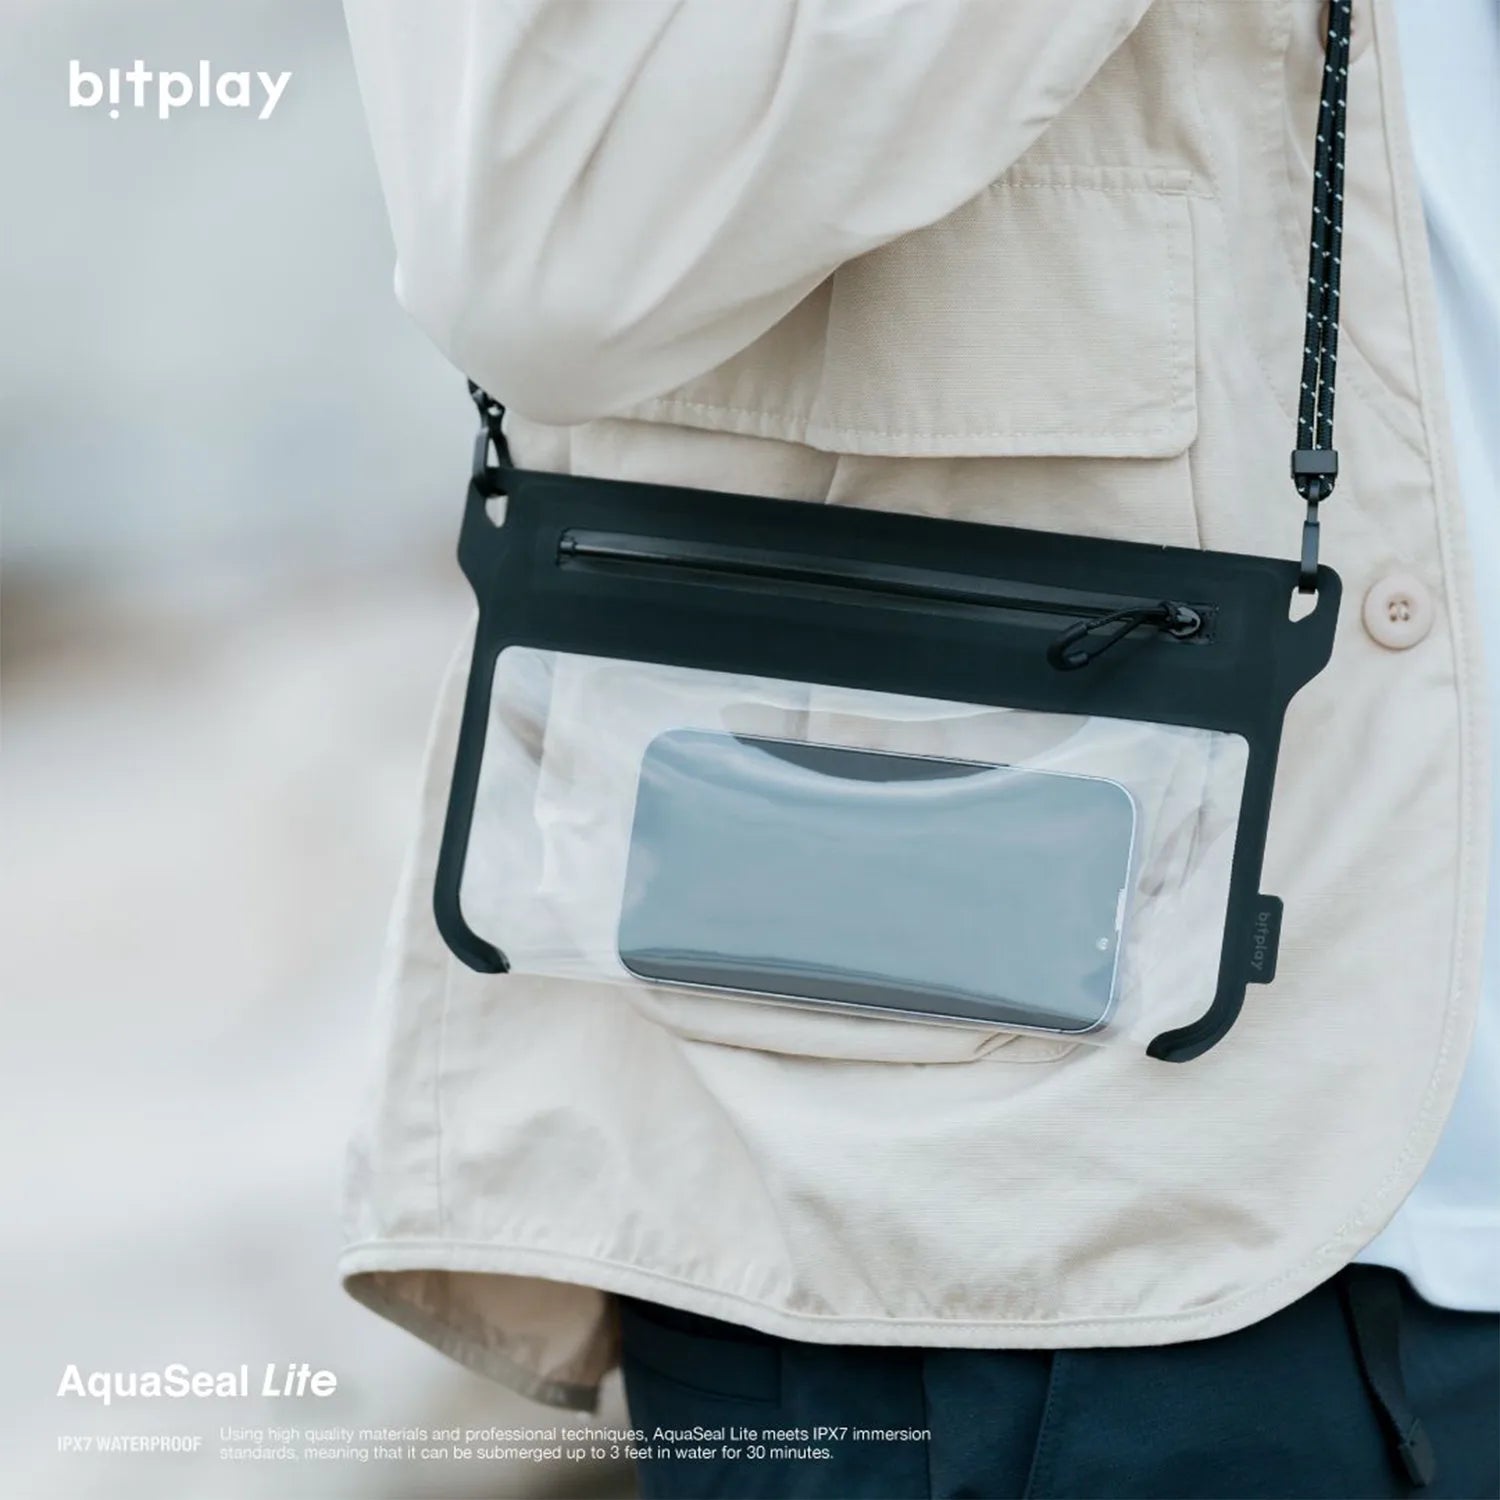 Bitplay AquaSeal Lite Waterproof Bag